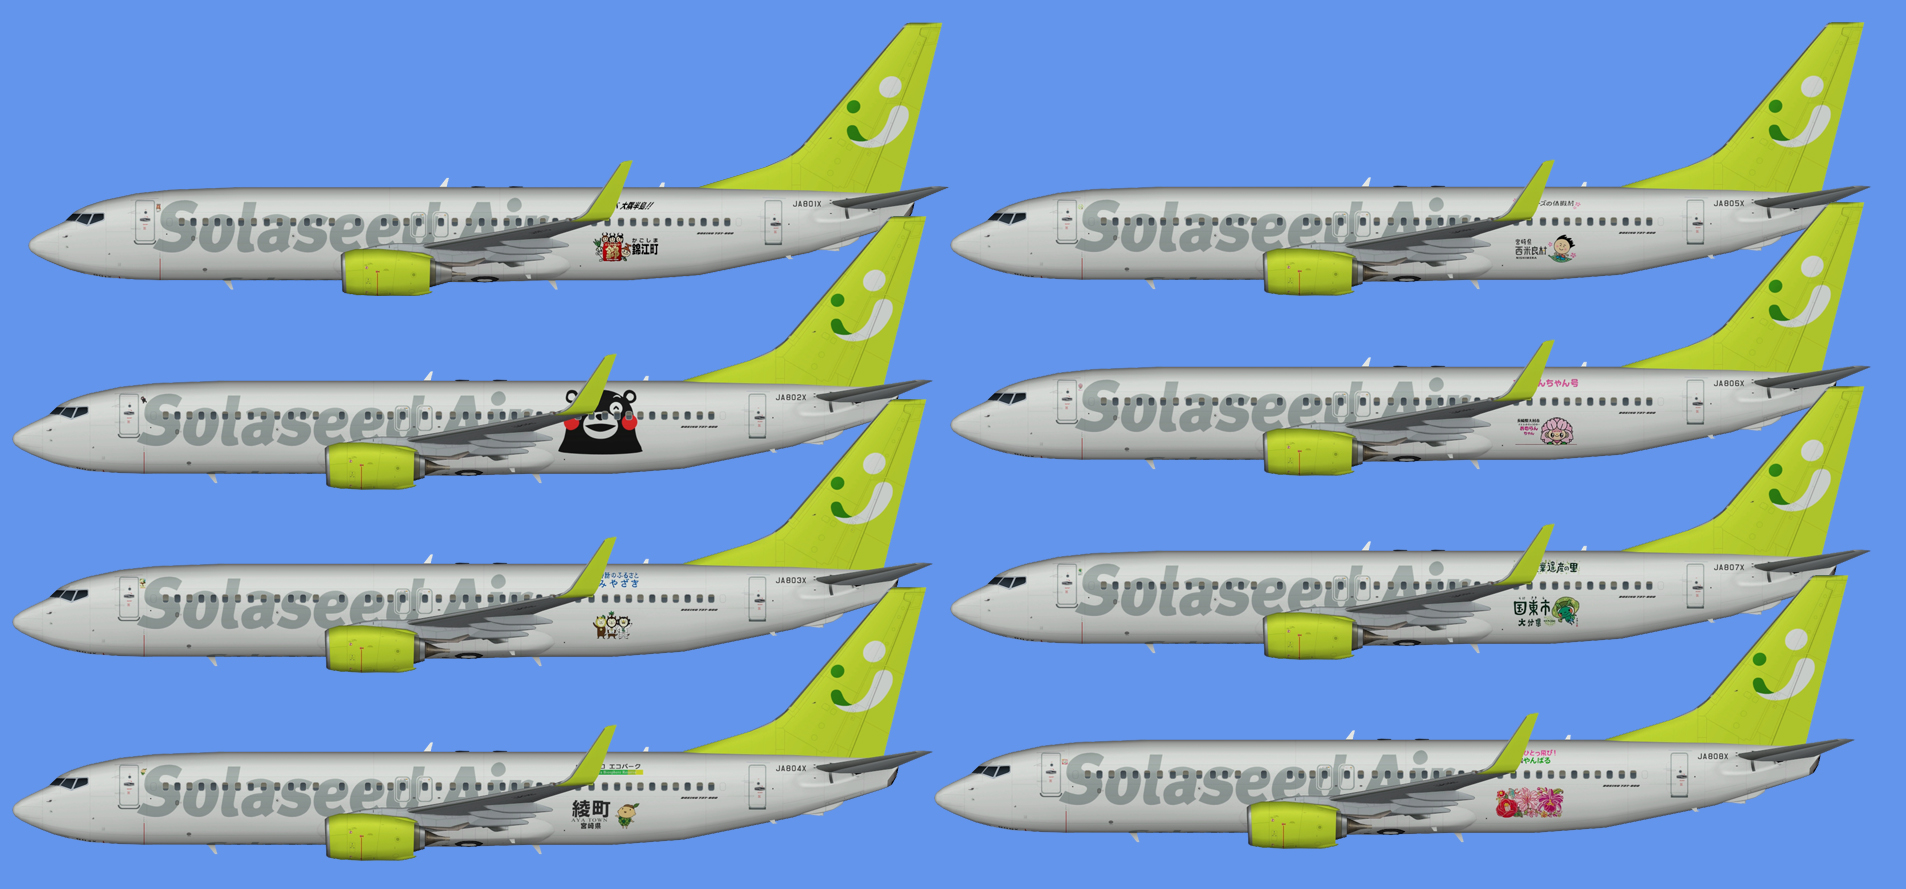 Solaseed Air Boeing 737-800 logojets